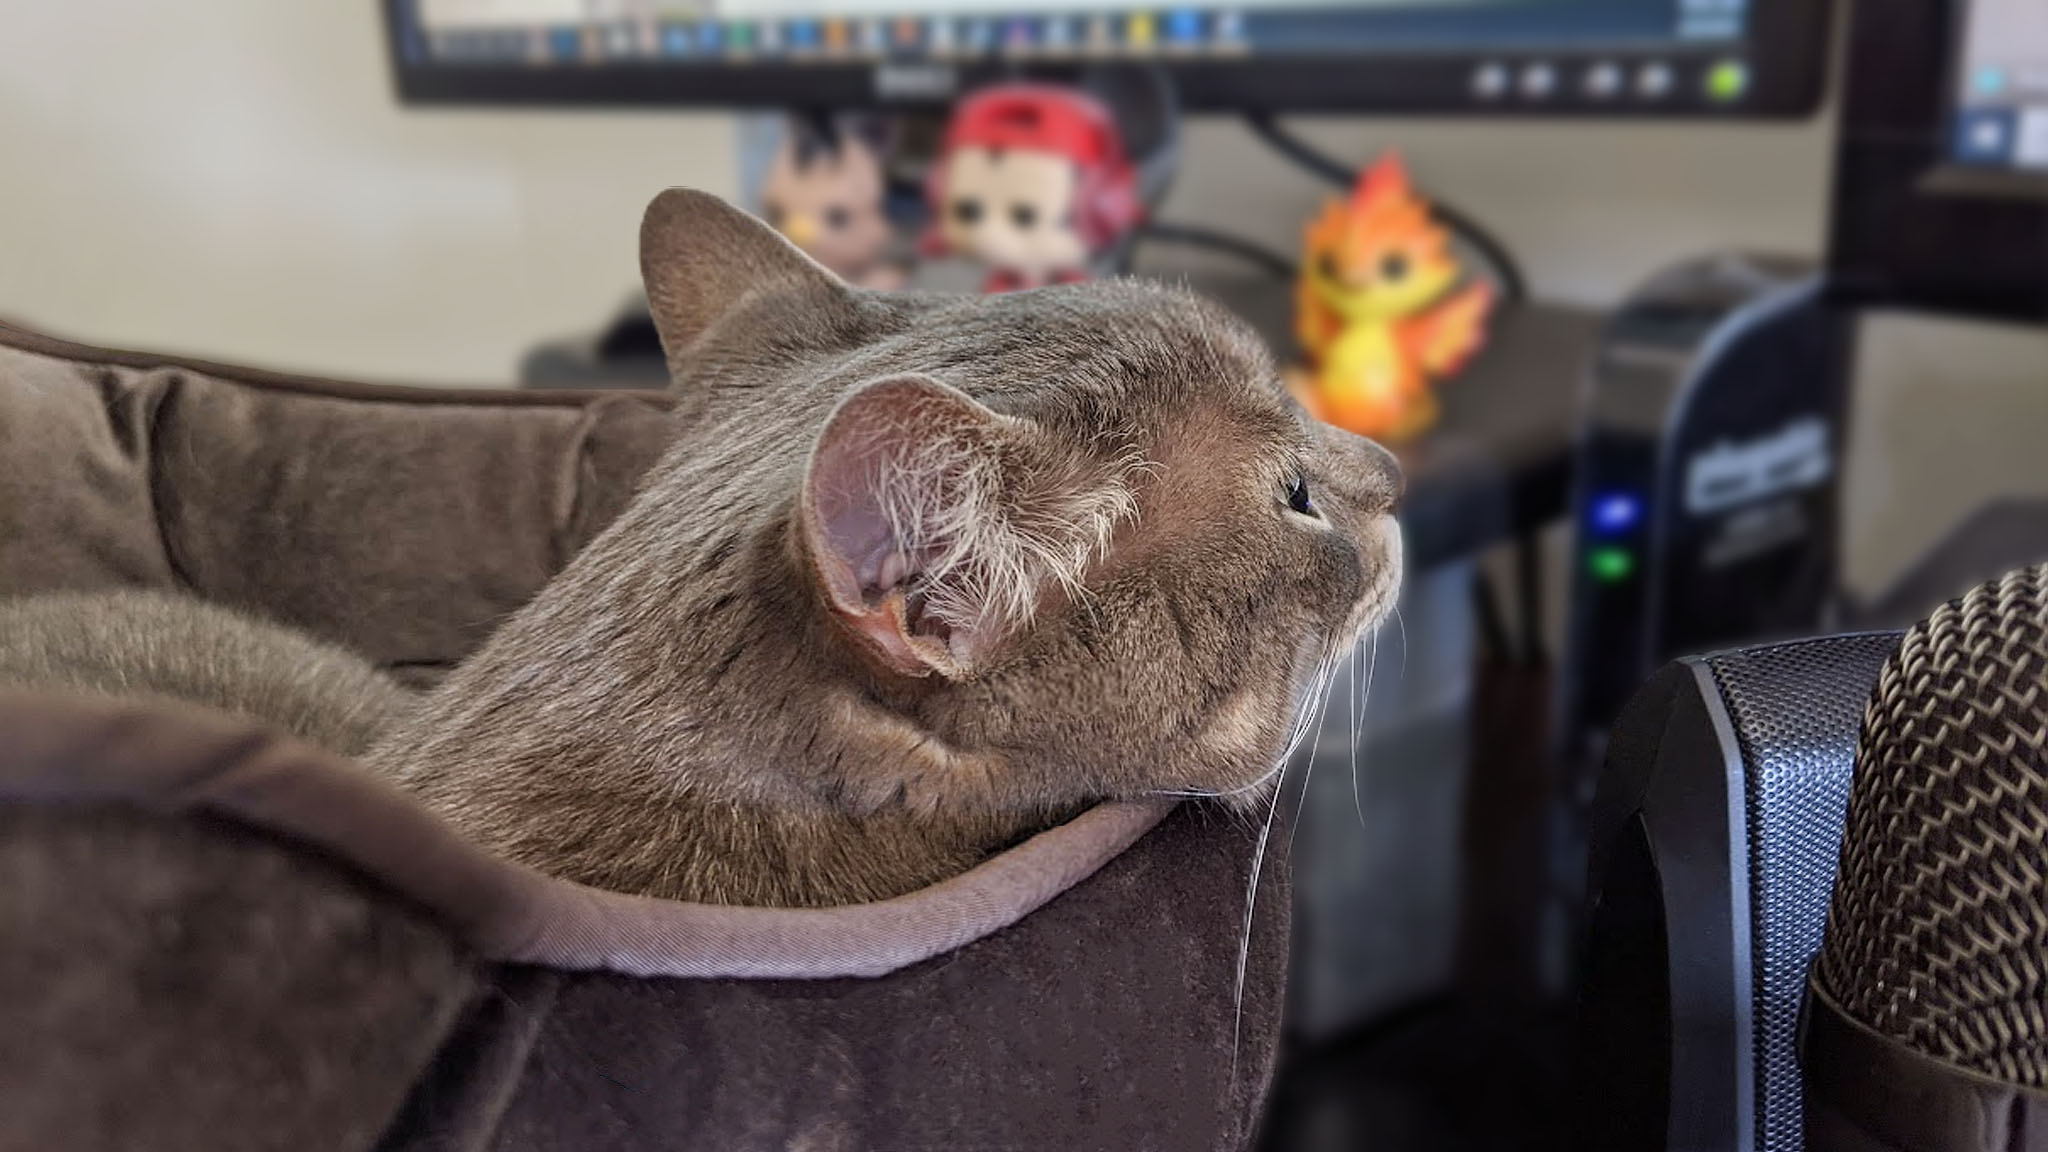 Cat in cat bed on computer desk.